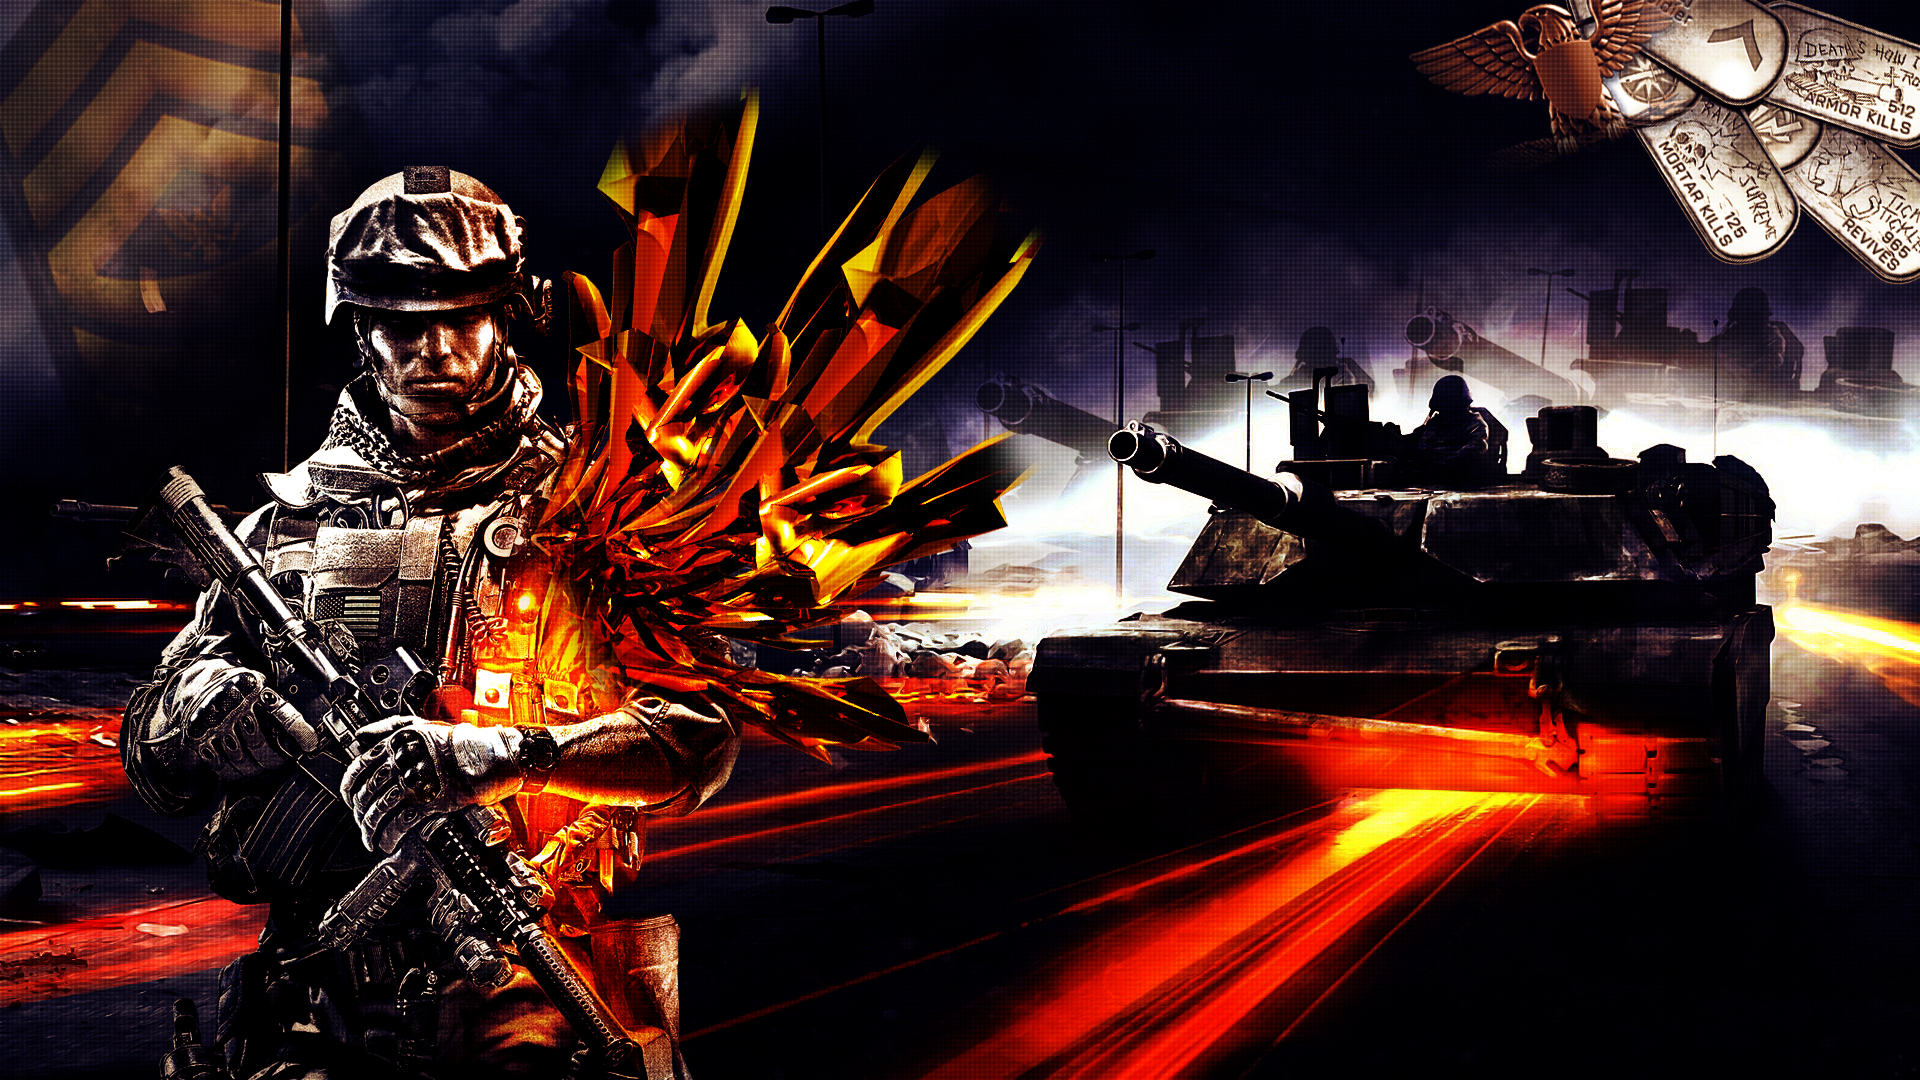 Battlefield 3 Wallpaper by JotaBR on DeviantArt